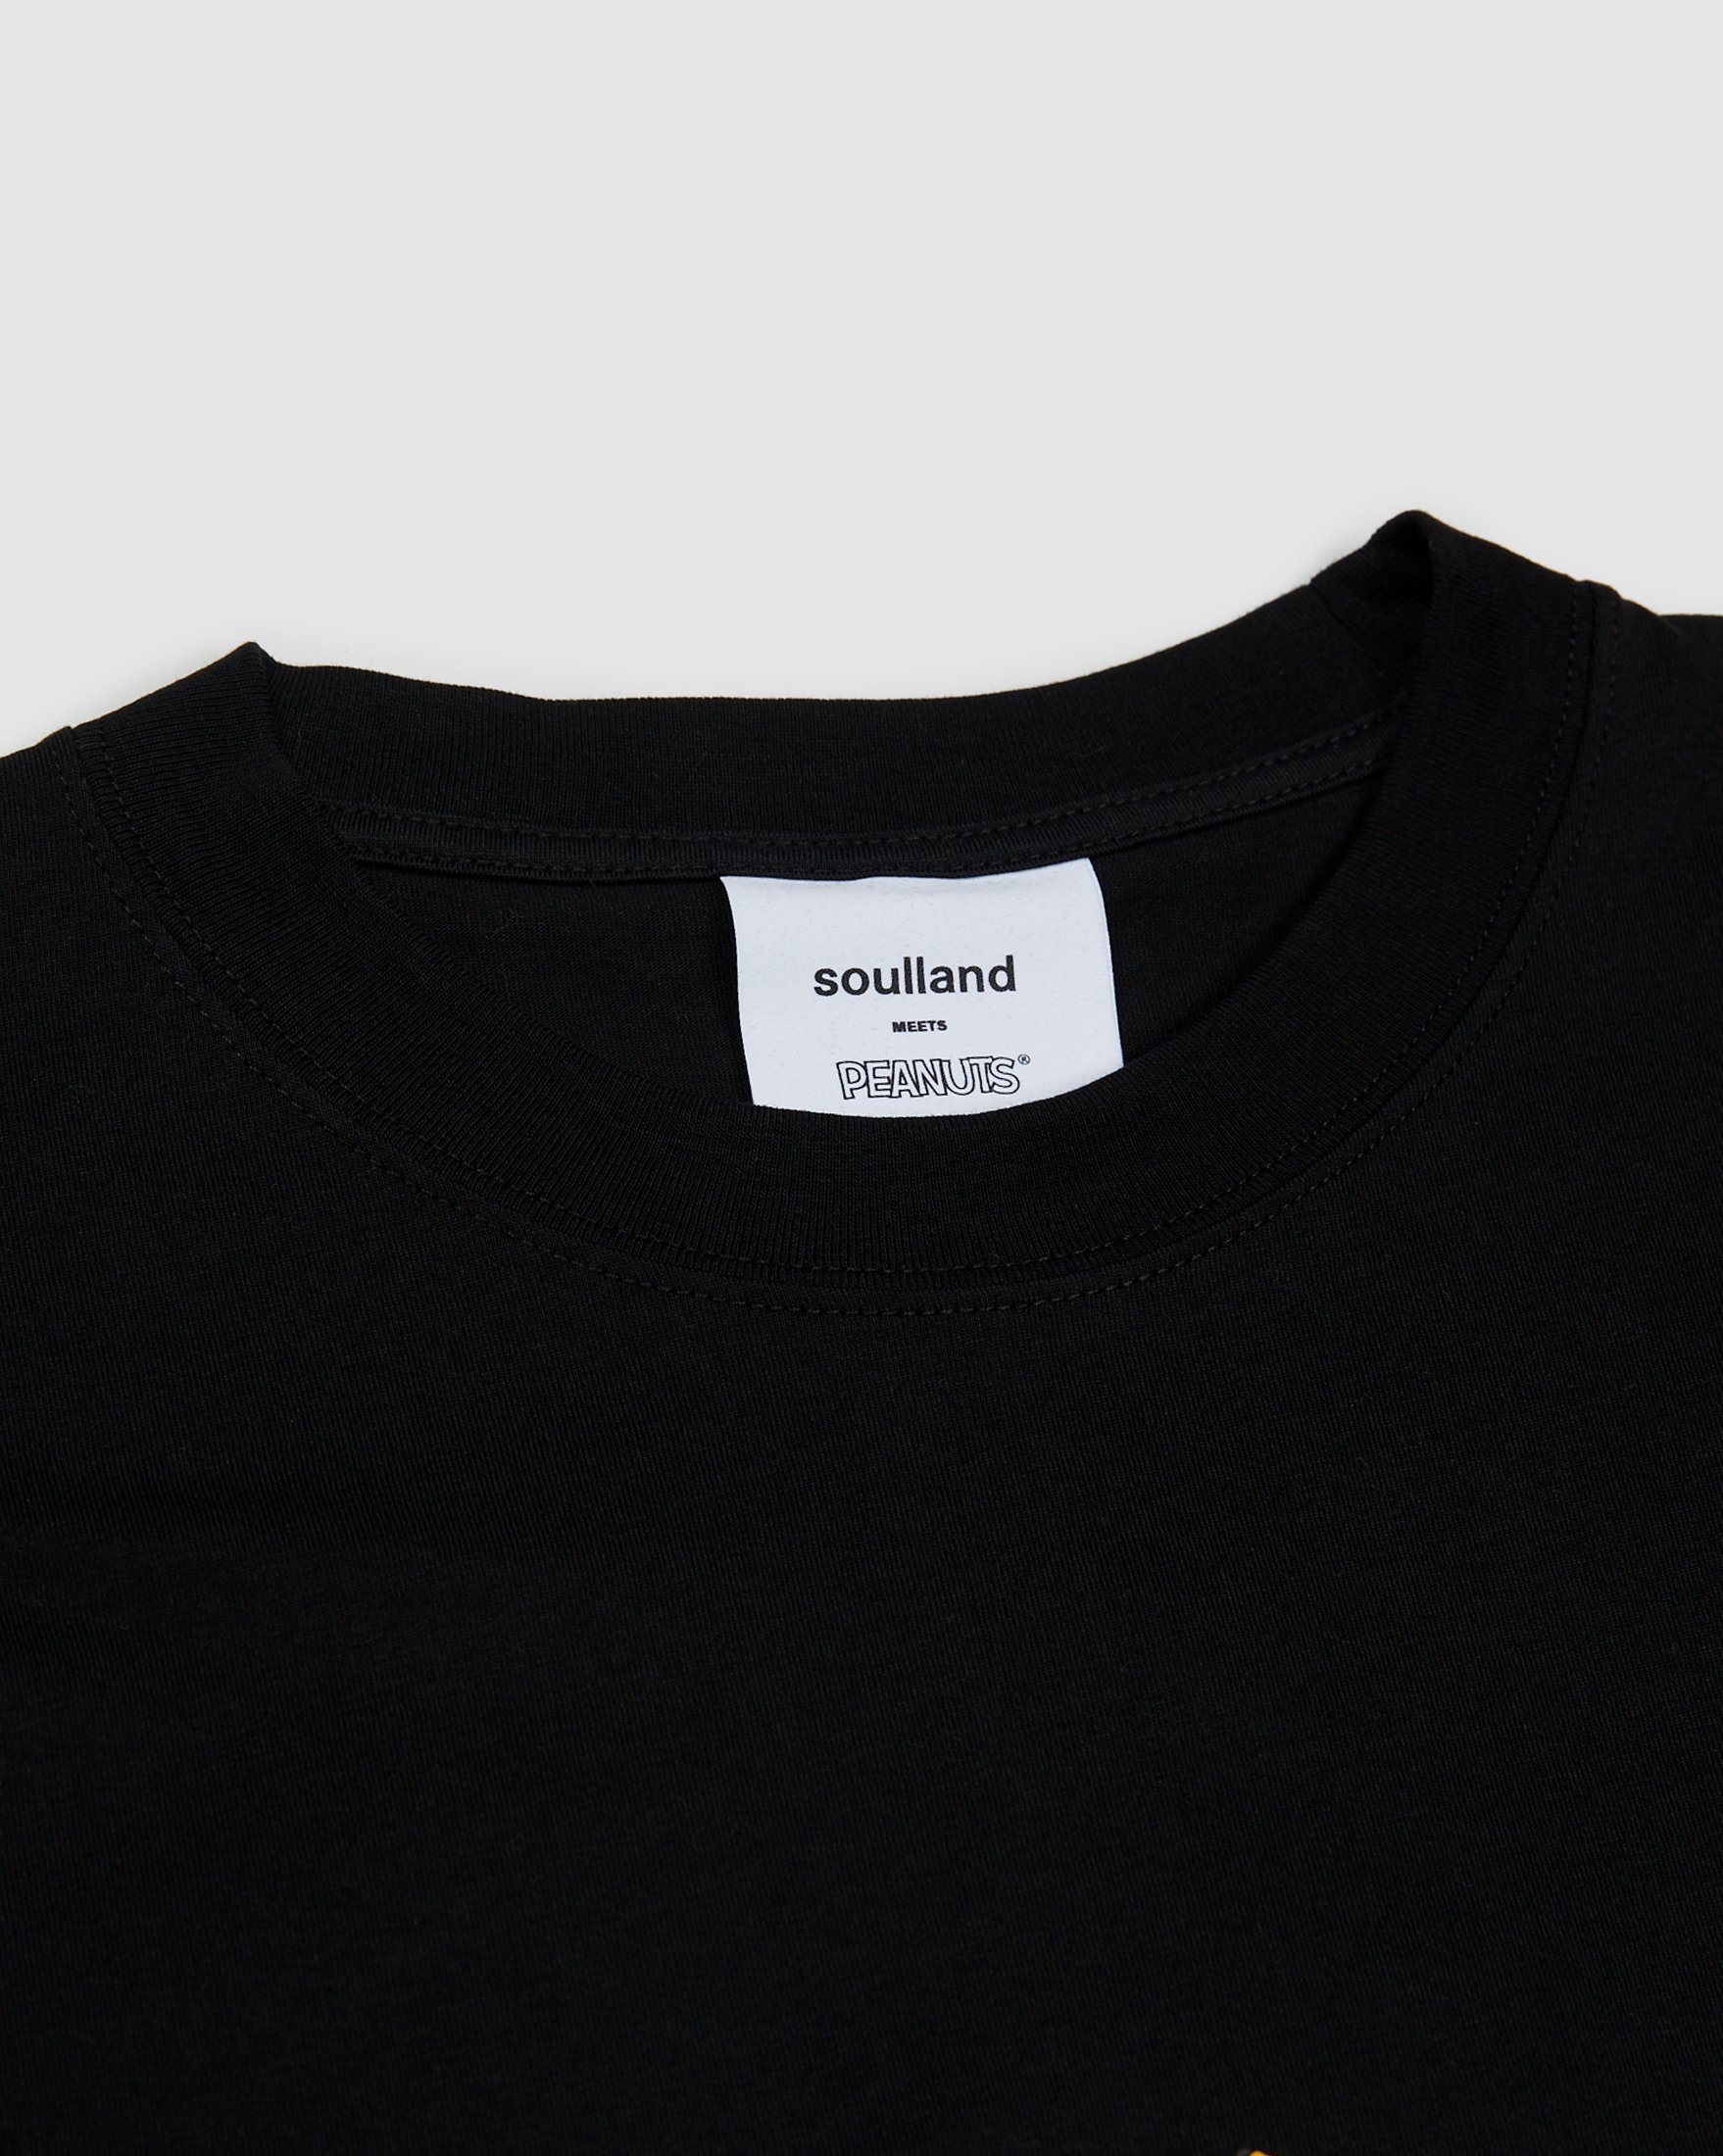 Colette Mon Amour x Soulland - Snoopy Bed Black T-Shirt - Clothing - Black - Image 3